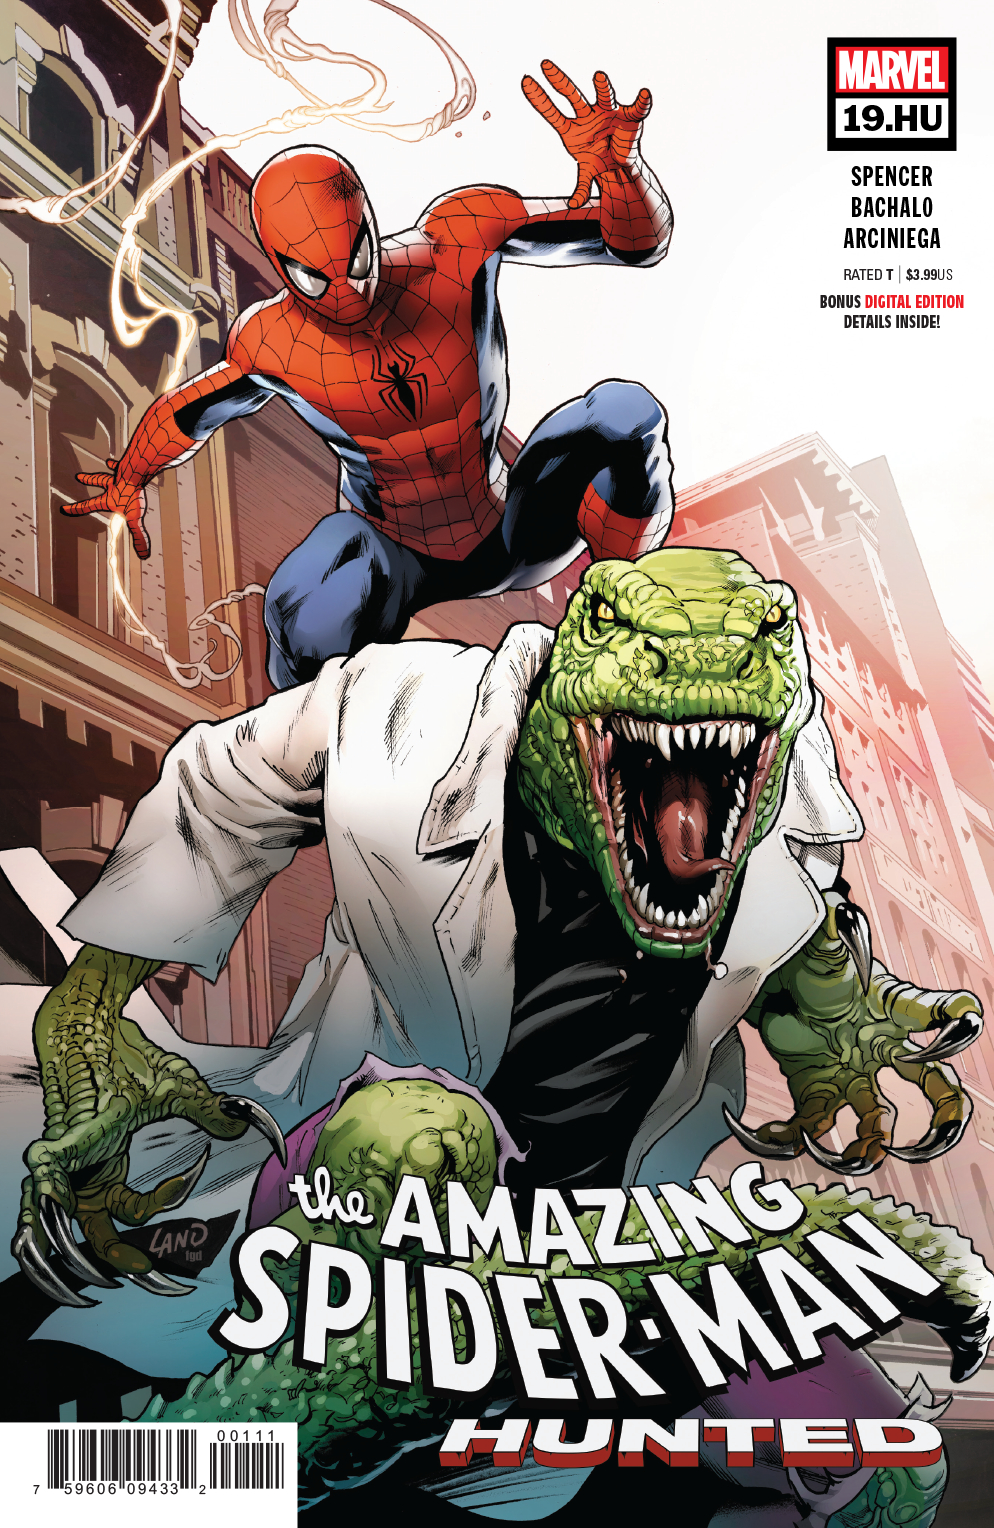 Amazing Spider-Man no. 19.HU (2018 Series)